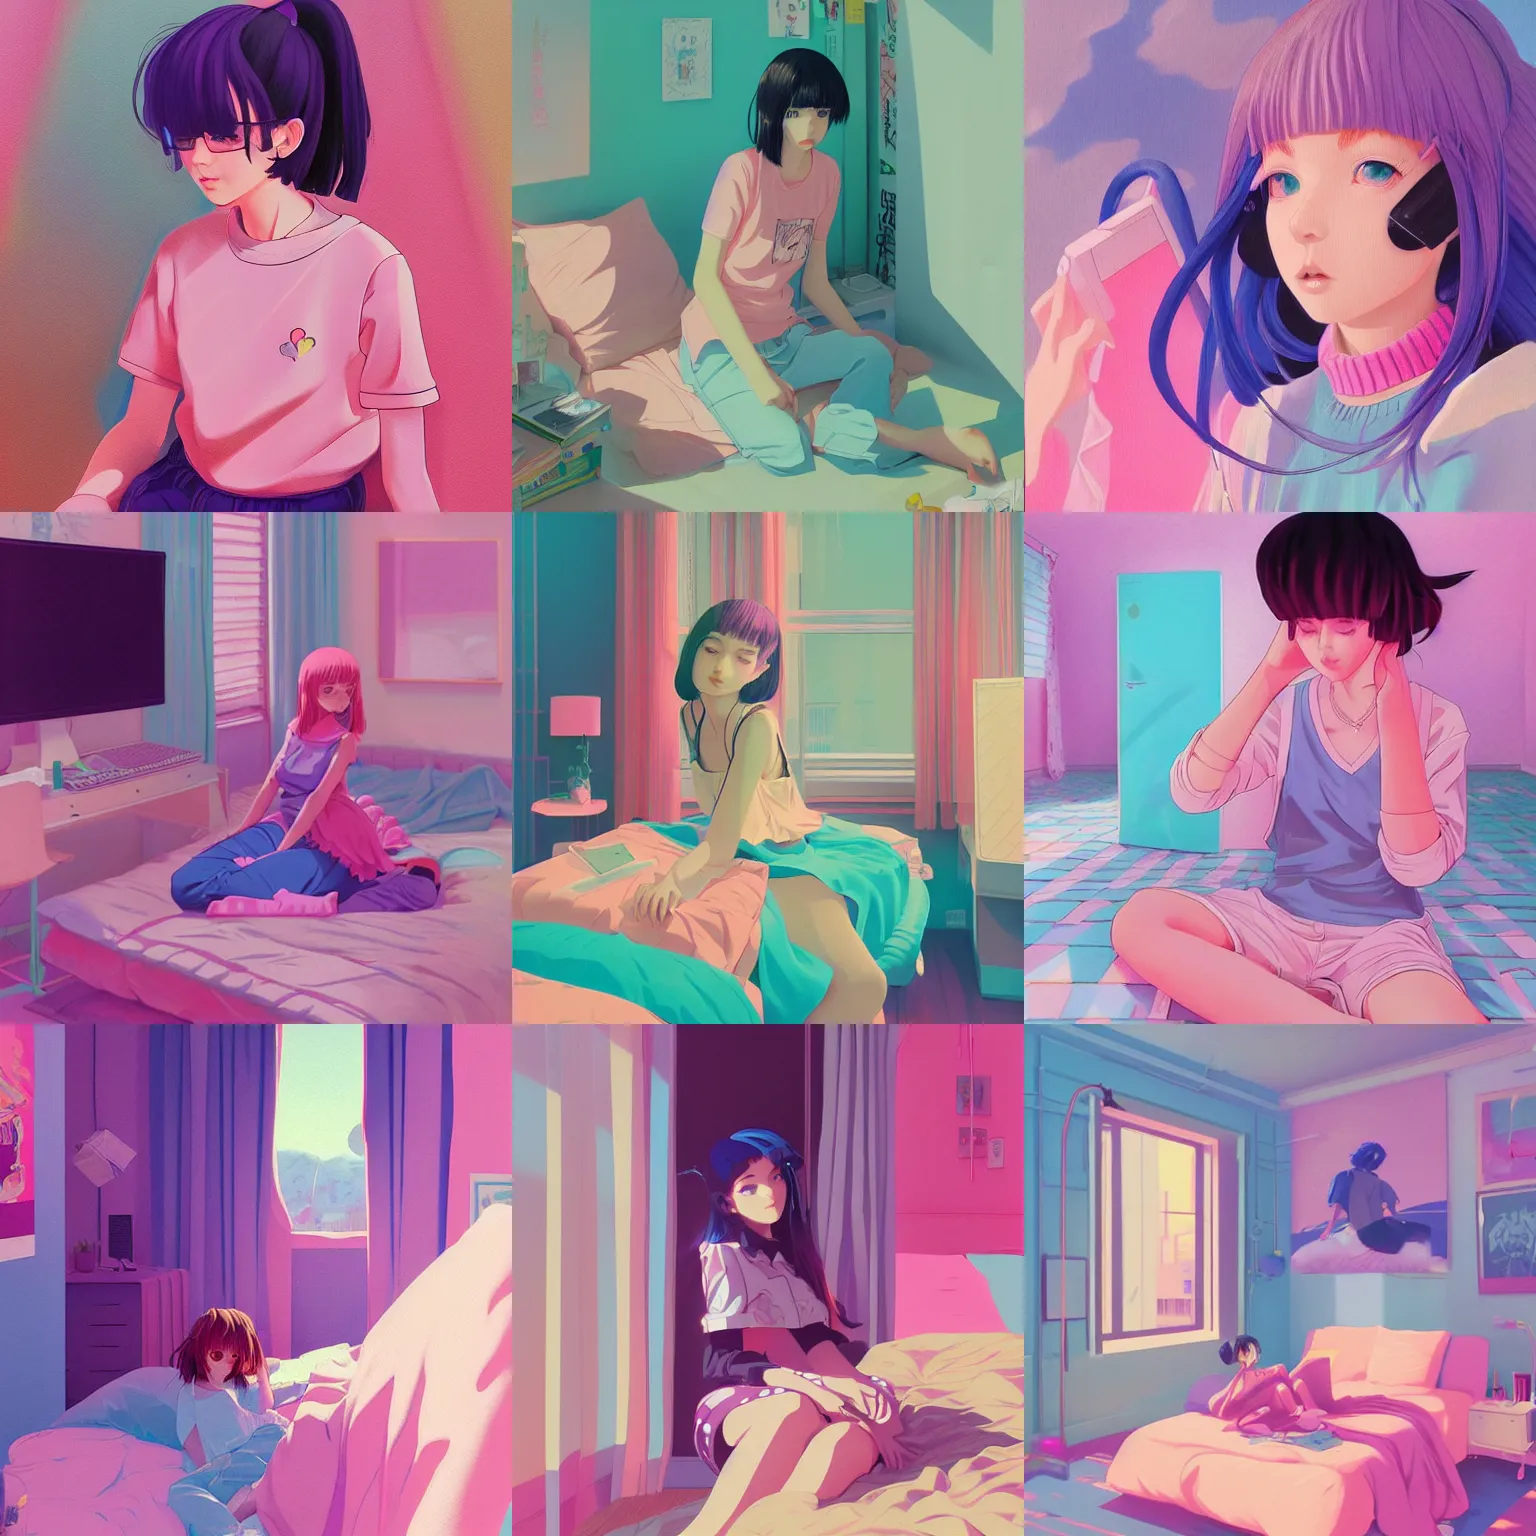 Prompt: retro 9 0 s, lofi girl aesthetic of a girl in her room, pastel vaporwave colors, anime, hyperrealistic painting, by stanley twardowicz, ilya kuvshinov, rossdraws